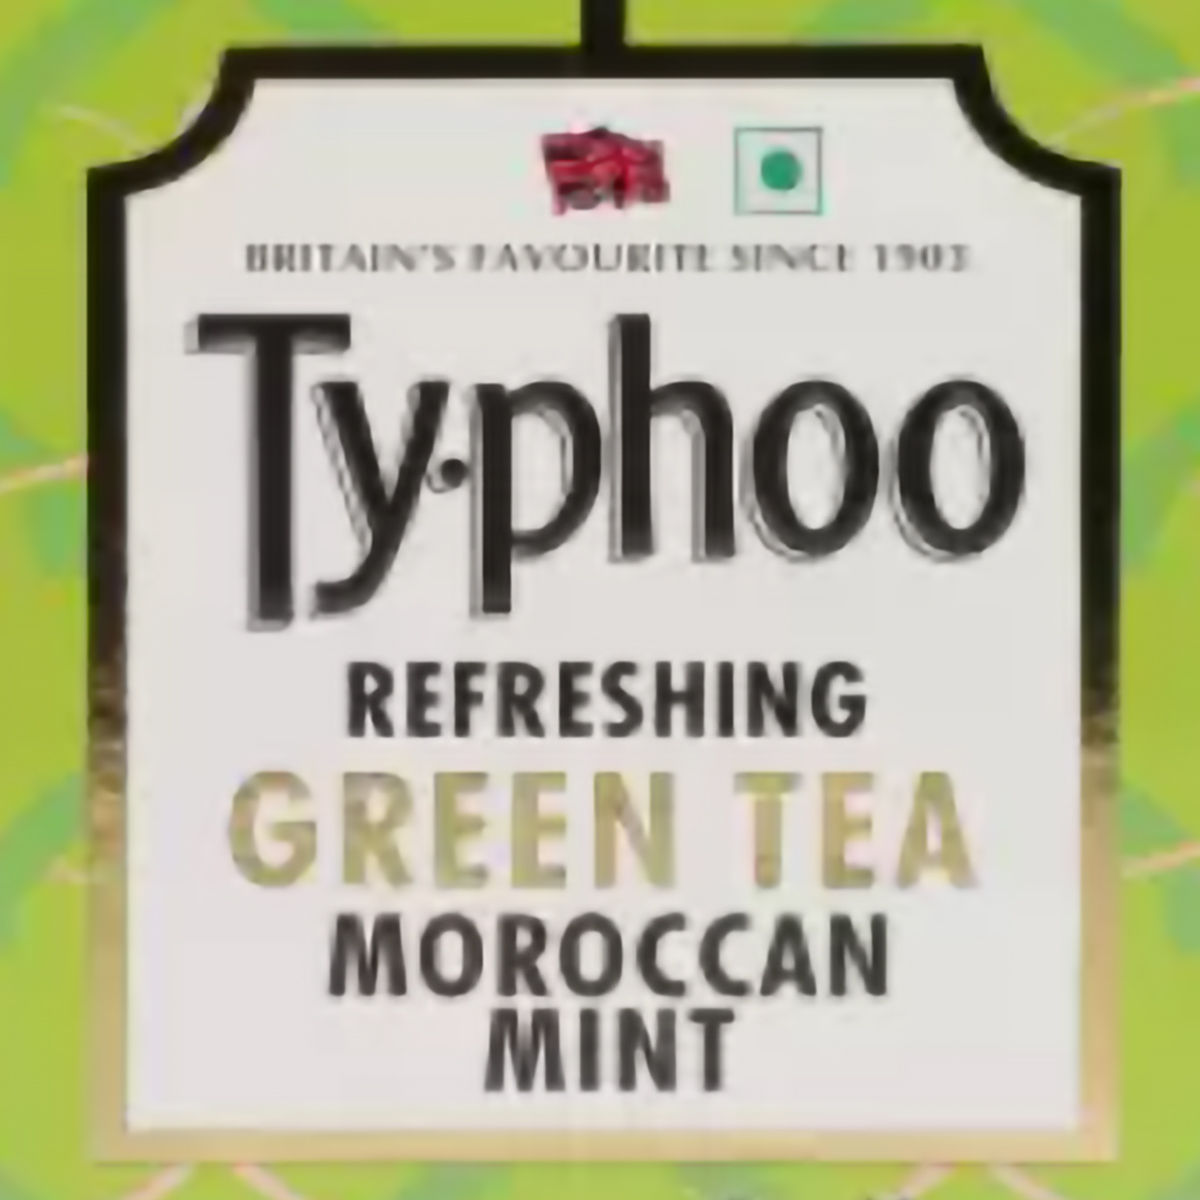 Buy Ty.phoo Refreshing Moroccan Mint Green Tea Bags, 25 Count Online